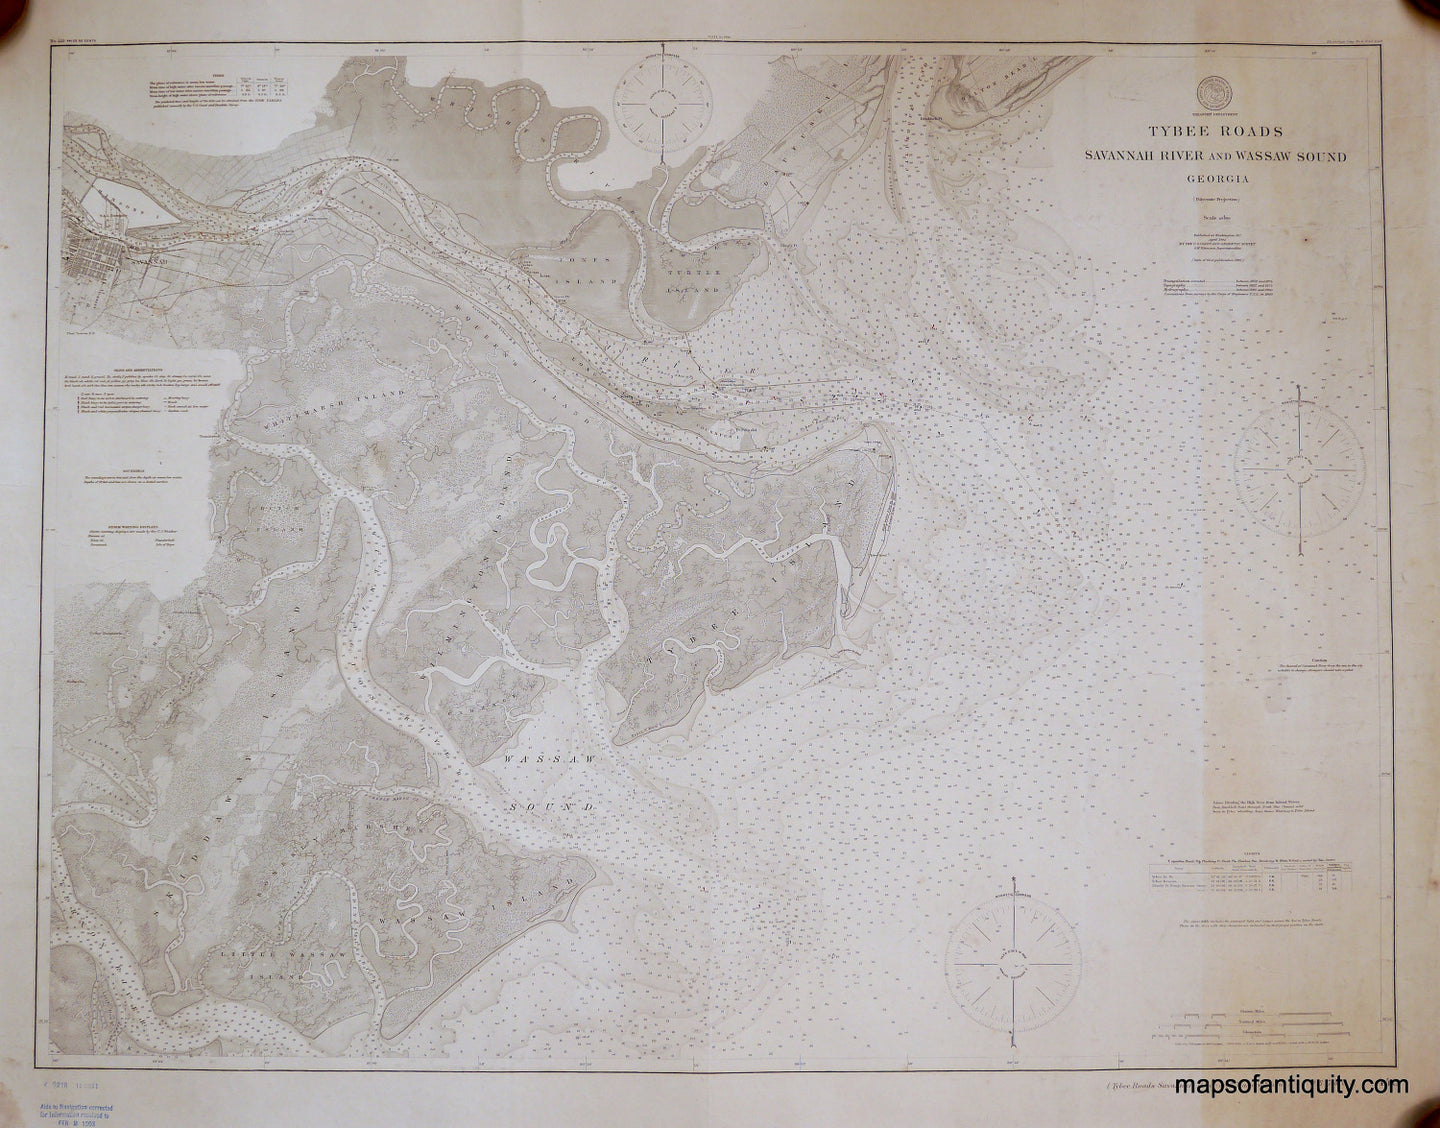 Antique-Nautical-Chart-Tybee-Roads-Savannah-River-and-Wassaw-Sound-Georgia--********-United-States-Georgia-1900-U.S.-Coast-&-Geodetic-Survey-Maps-Of-Antiquity